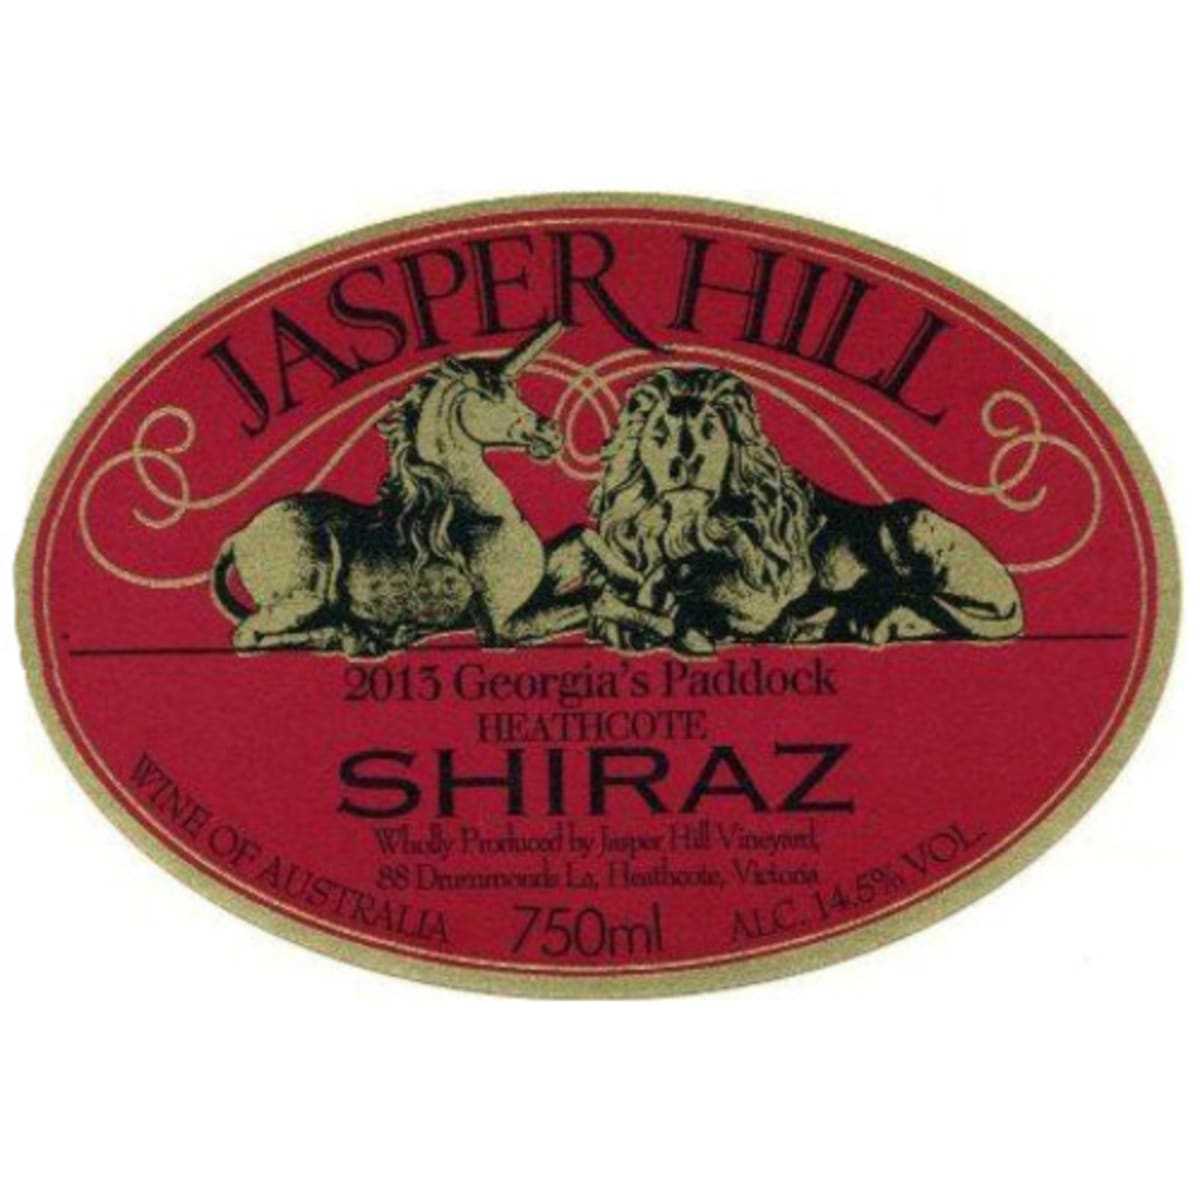 Jasper Hill Georgia's Paddock Shiraz 2013 Front Label